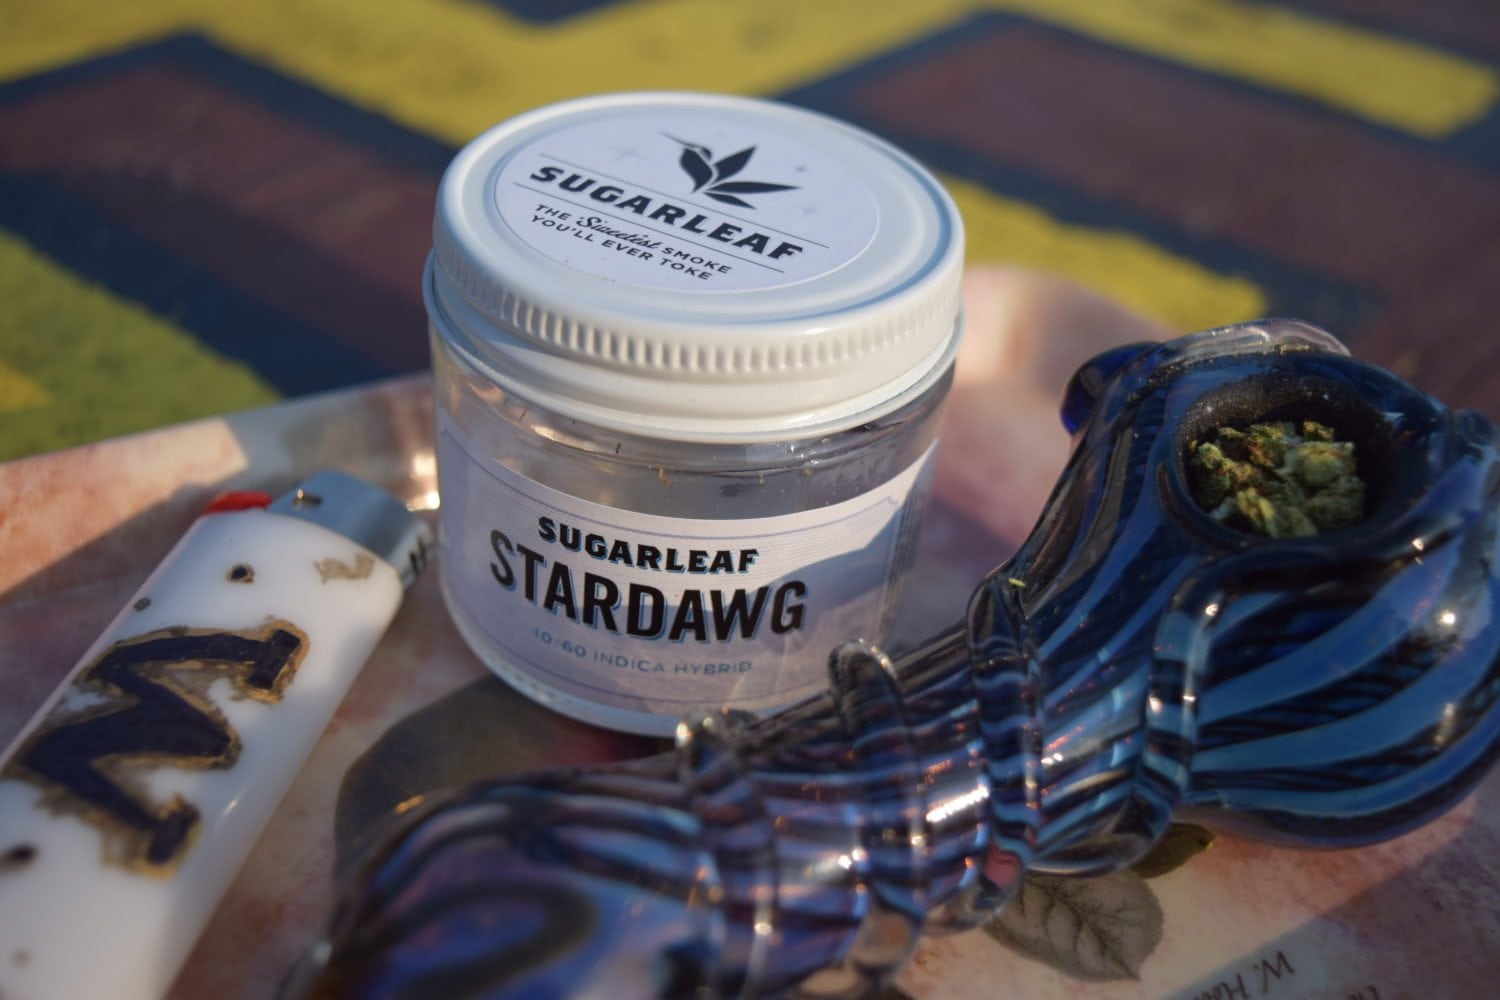 Reviewing Sugarleaf's Stardawg Cannabis Strain